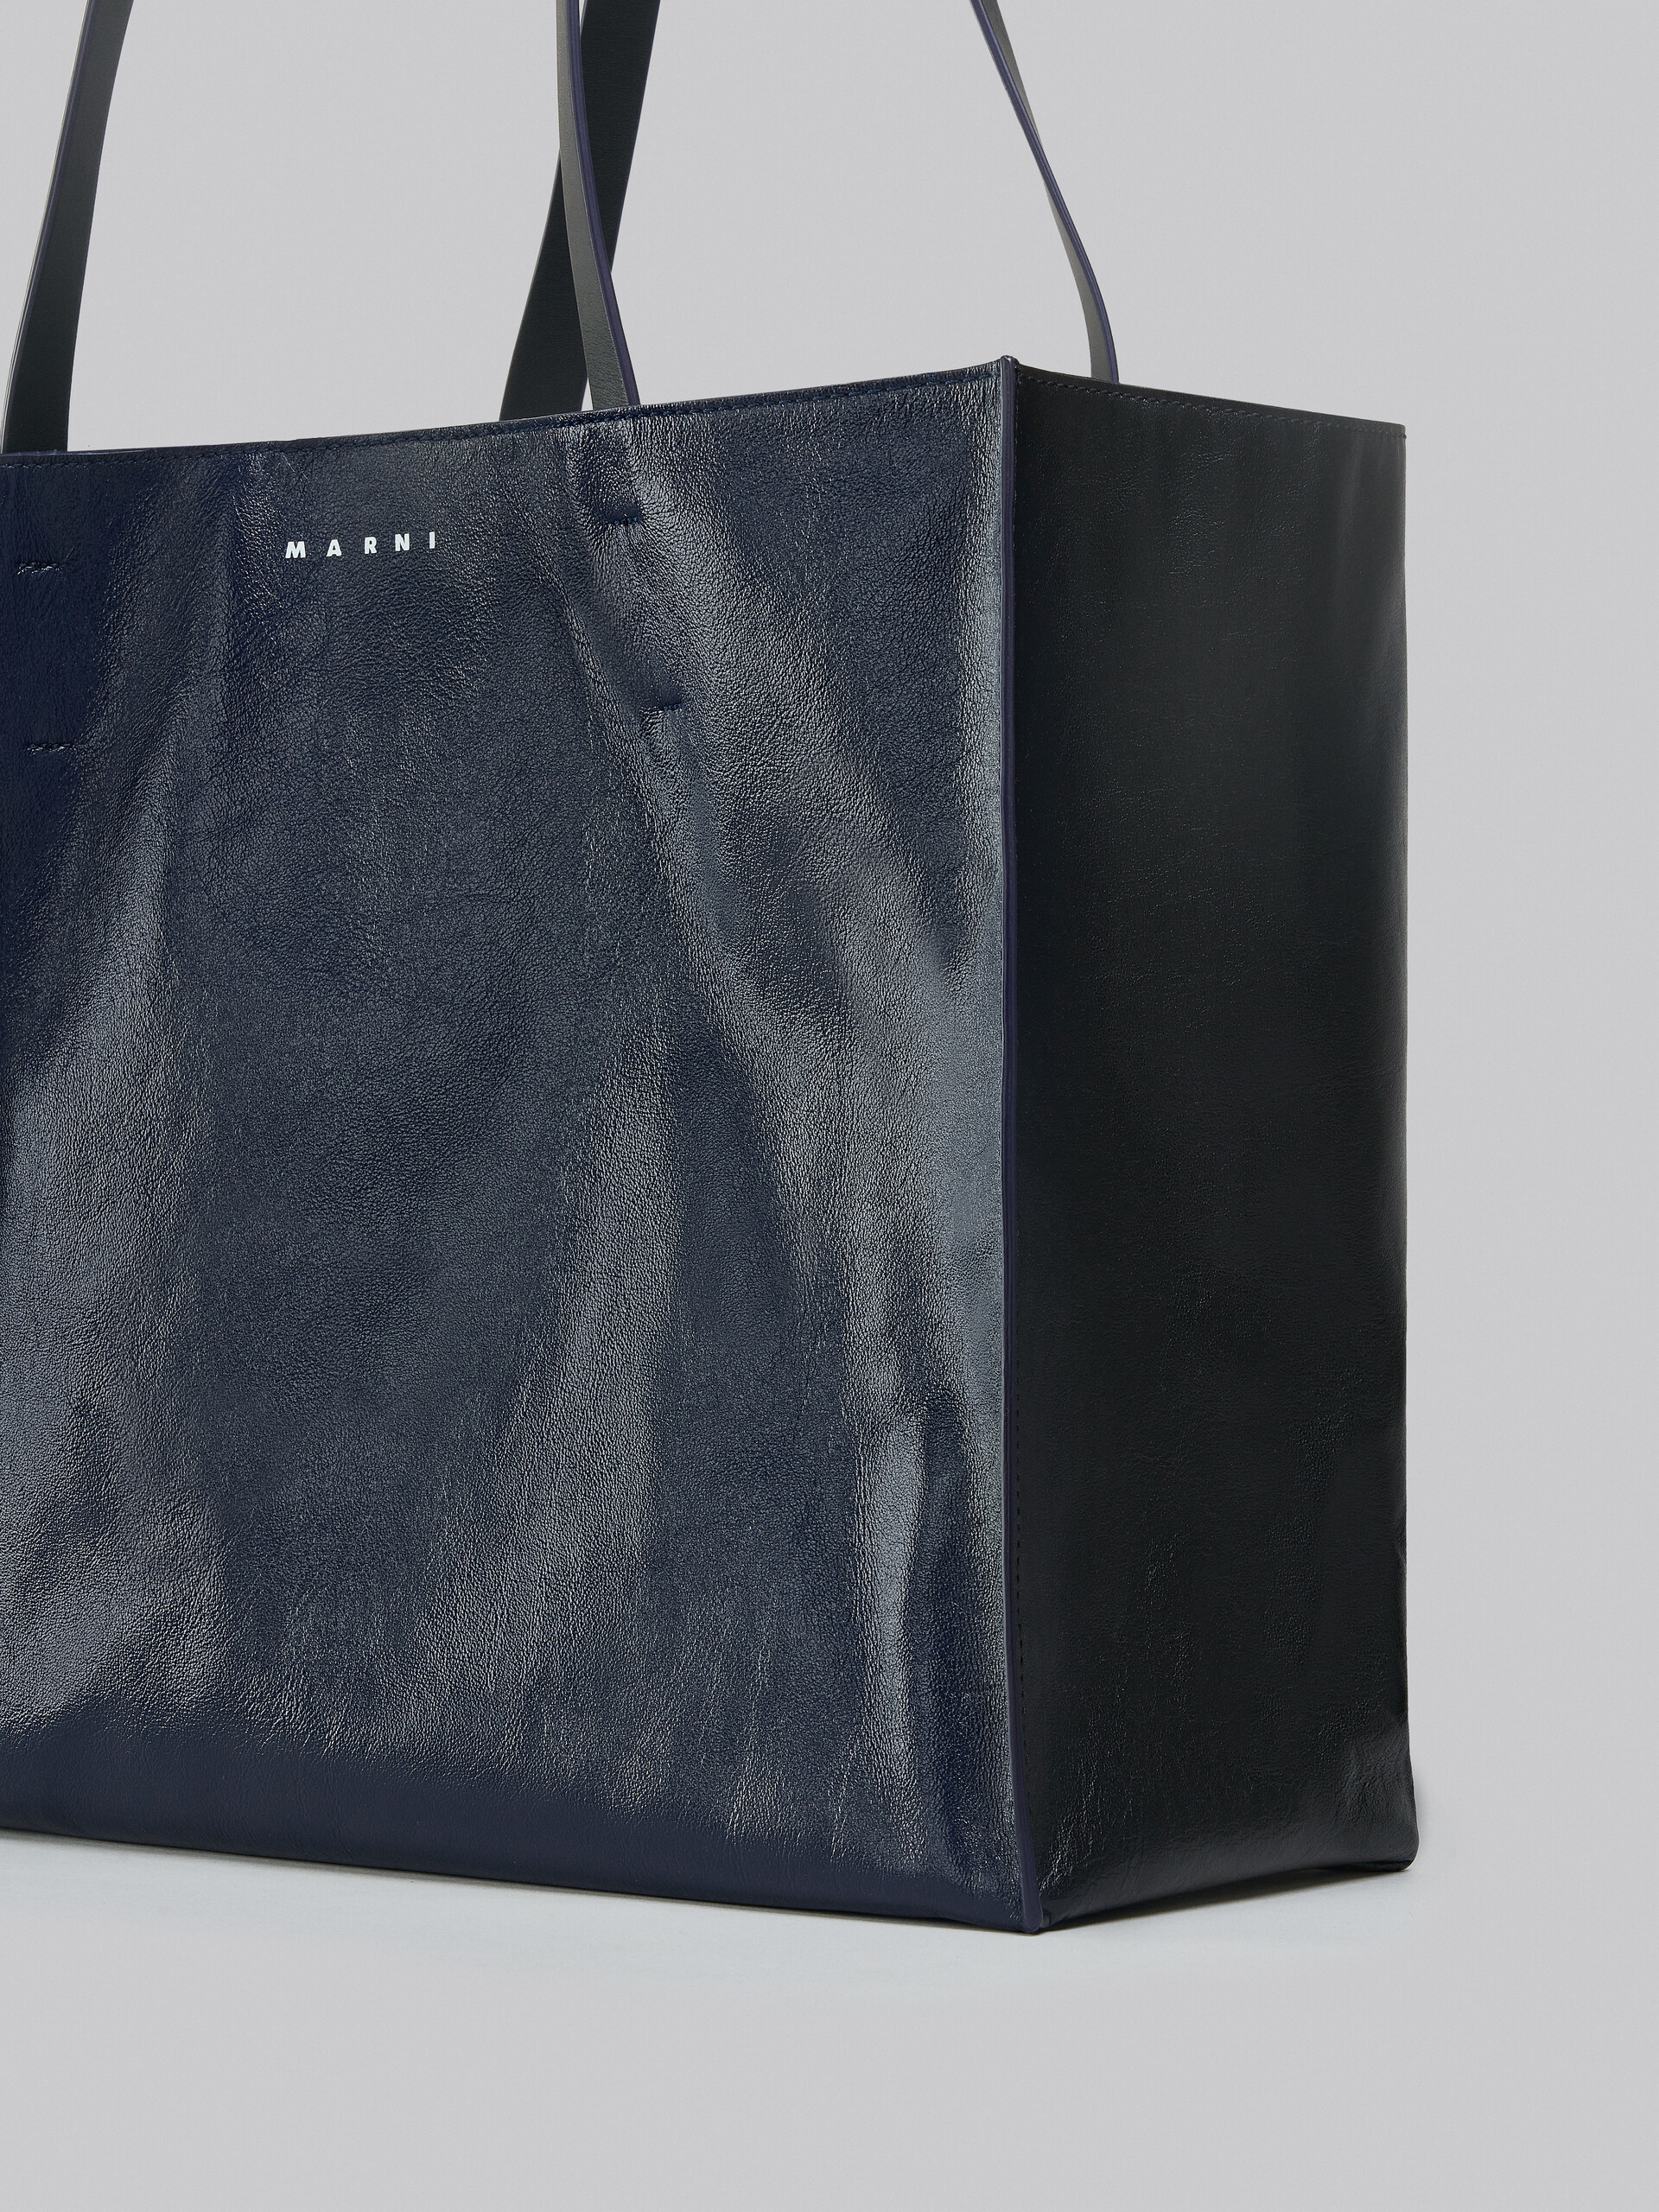 Museo Soft Bag in pelle blu e nera - Borse shopping - Image 5